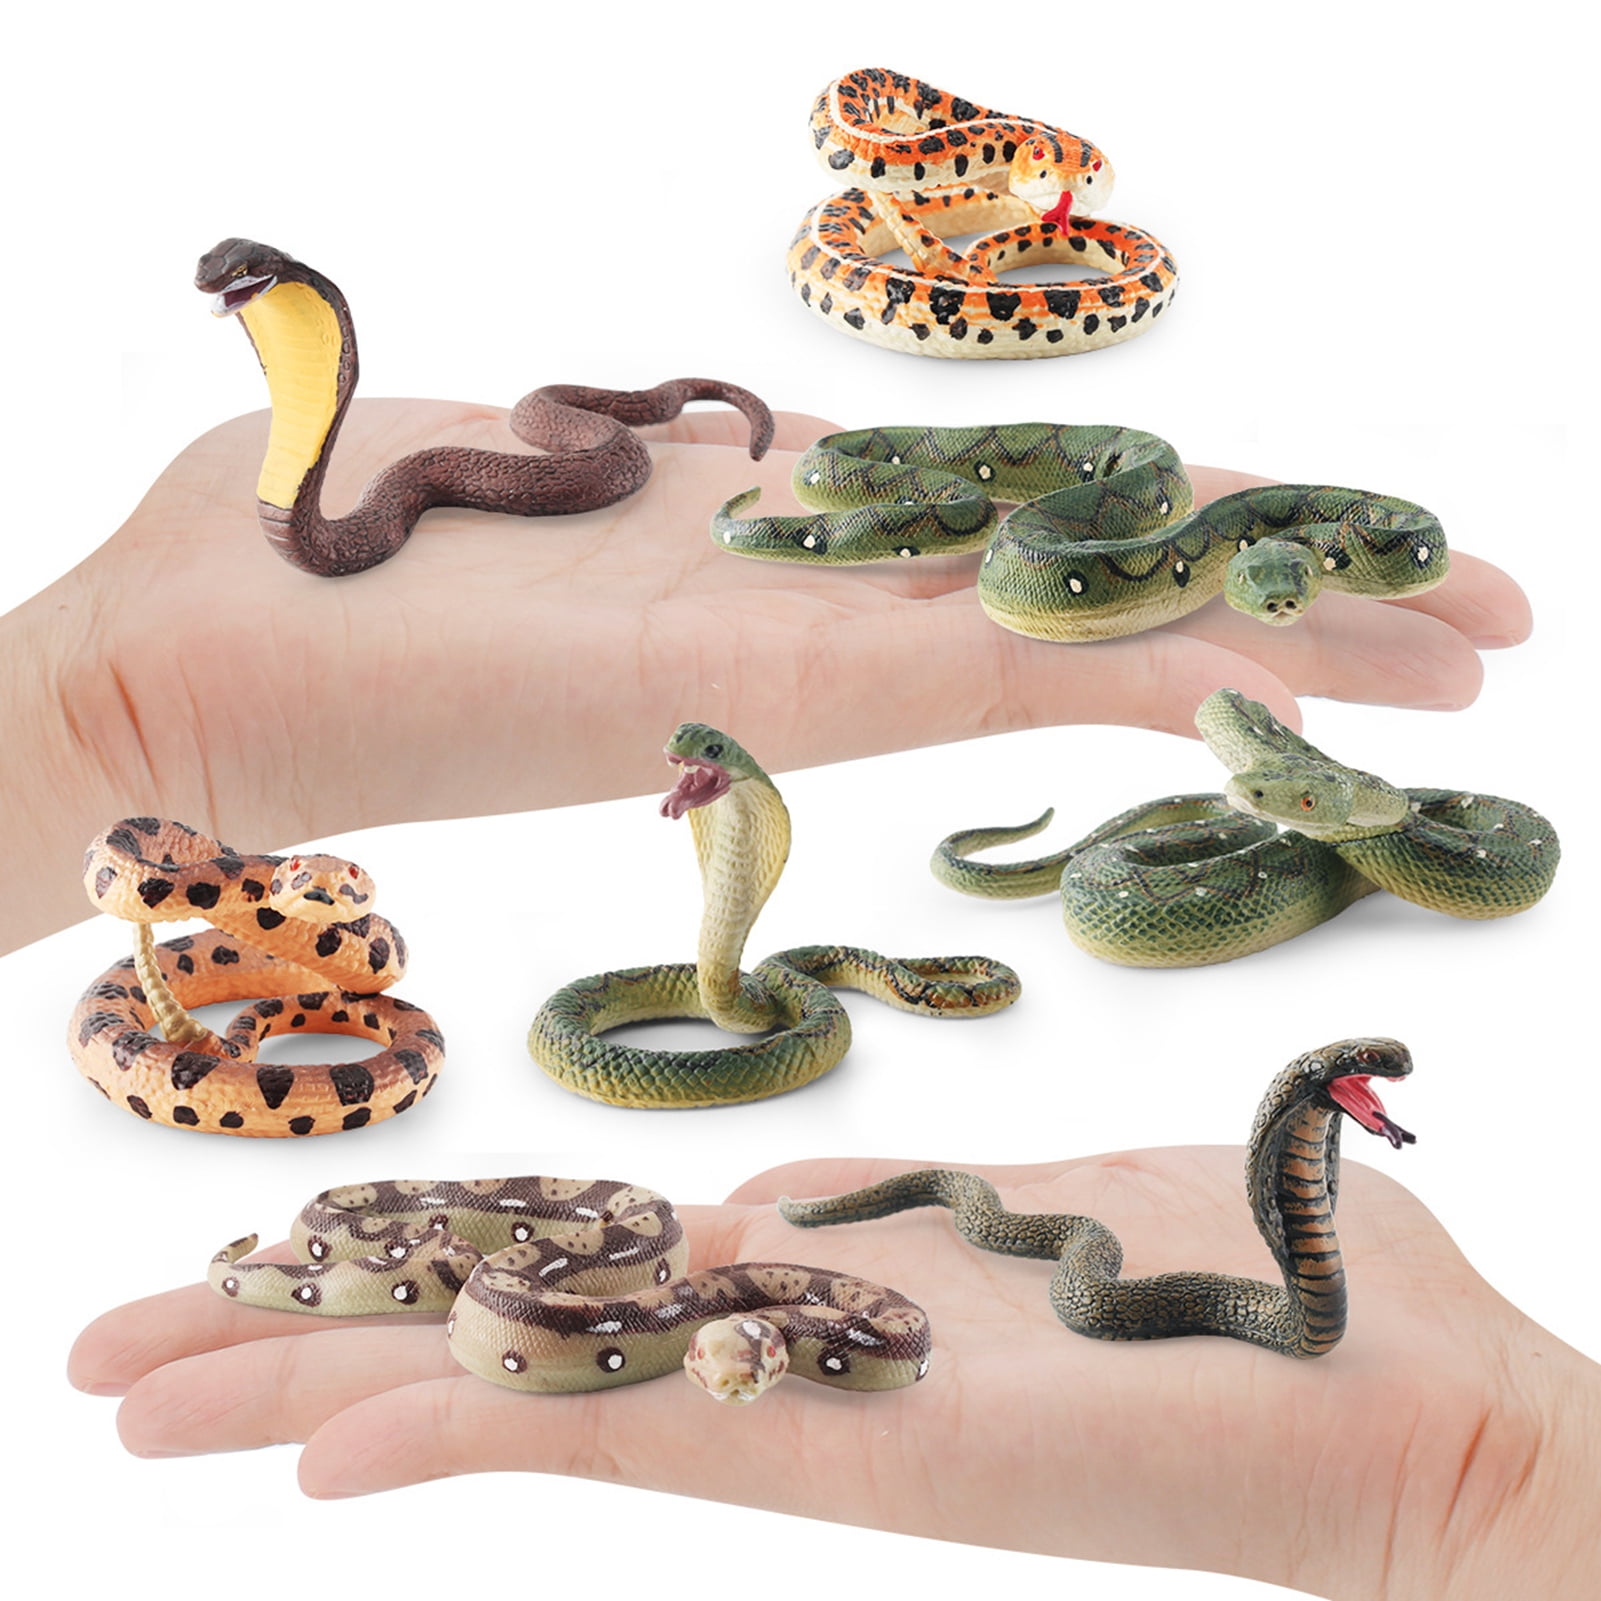 Mini Plastic Snakes Toys, Python Figurines Models